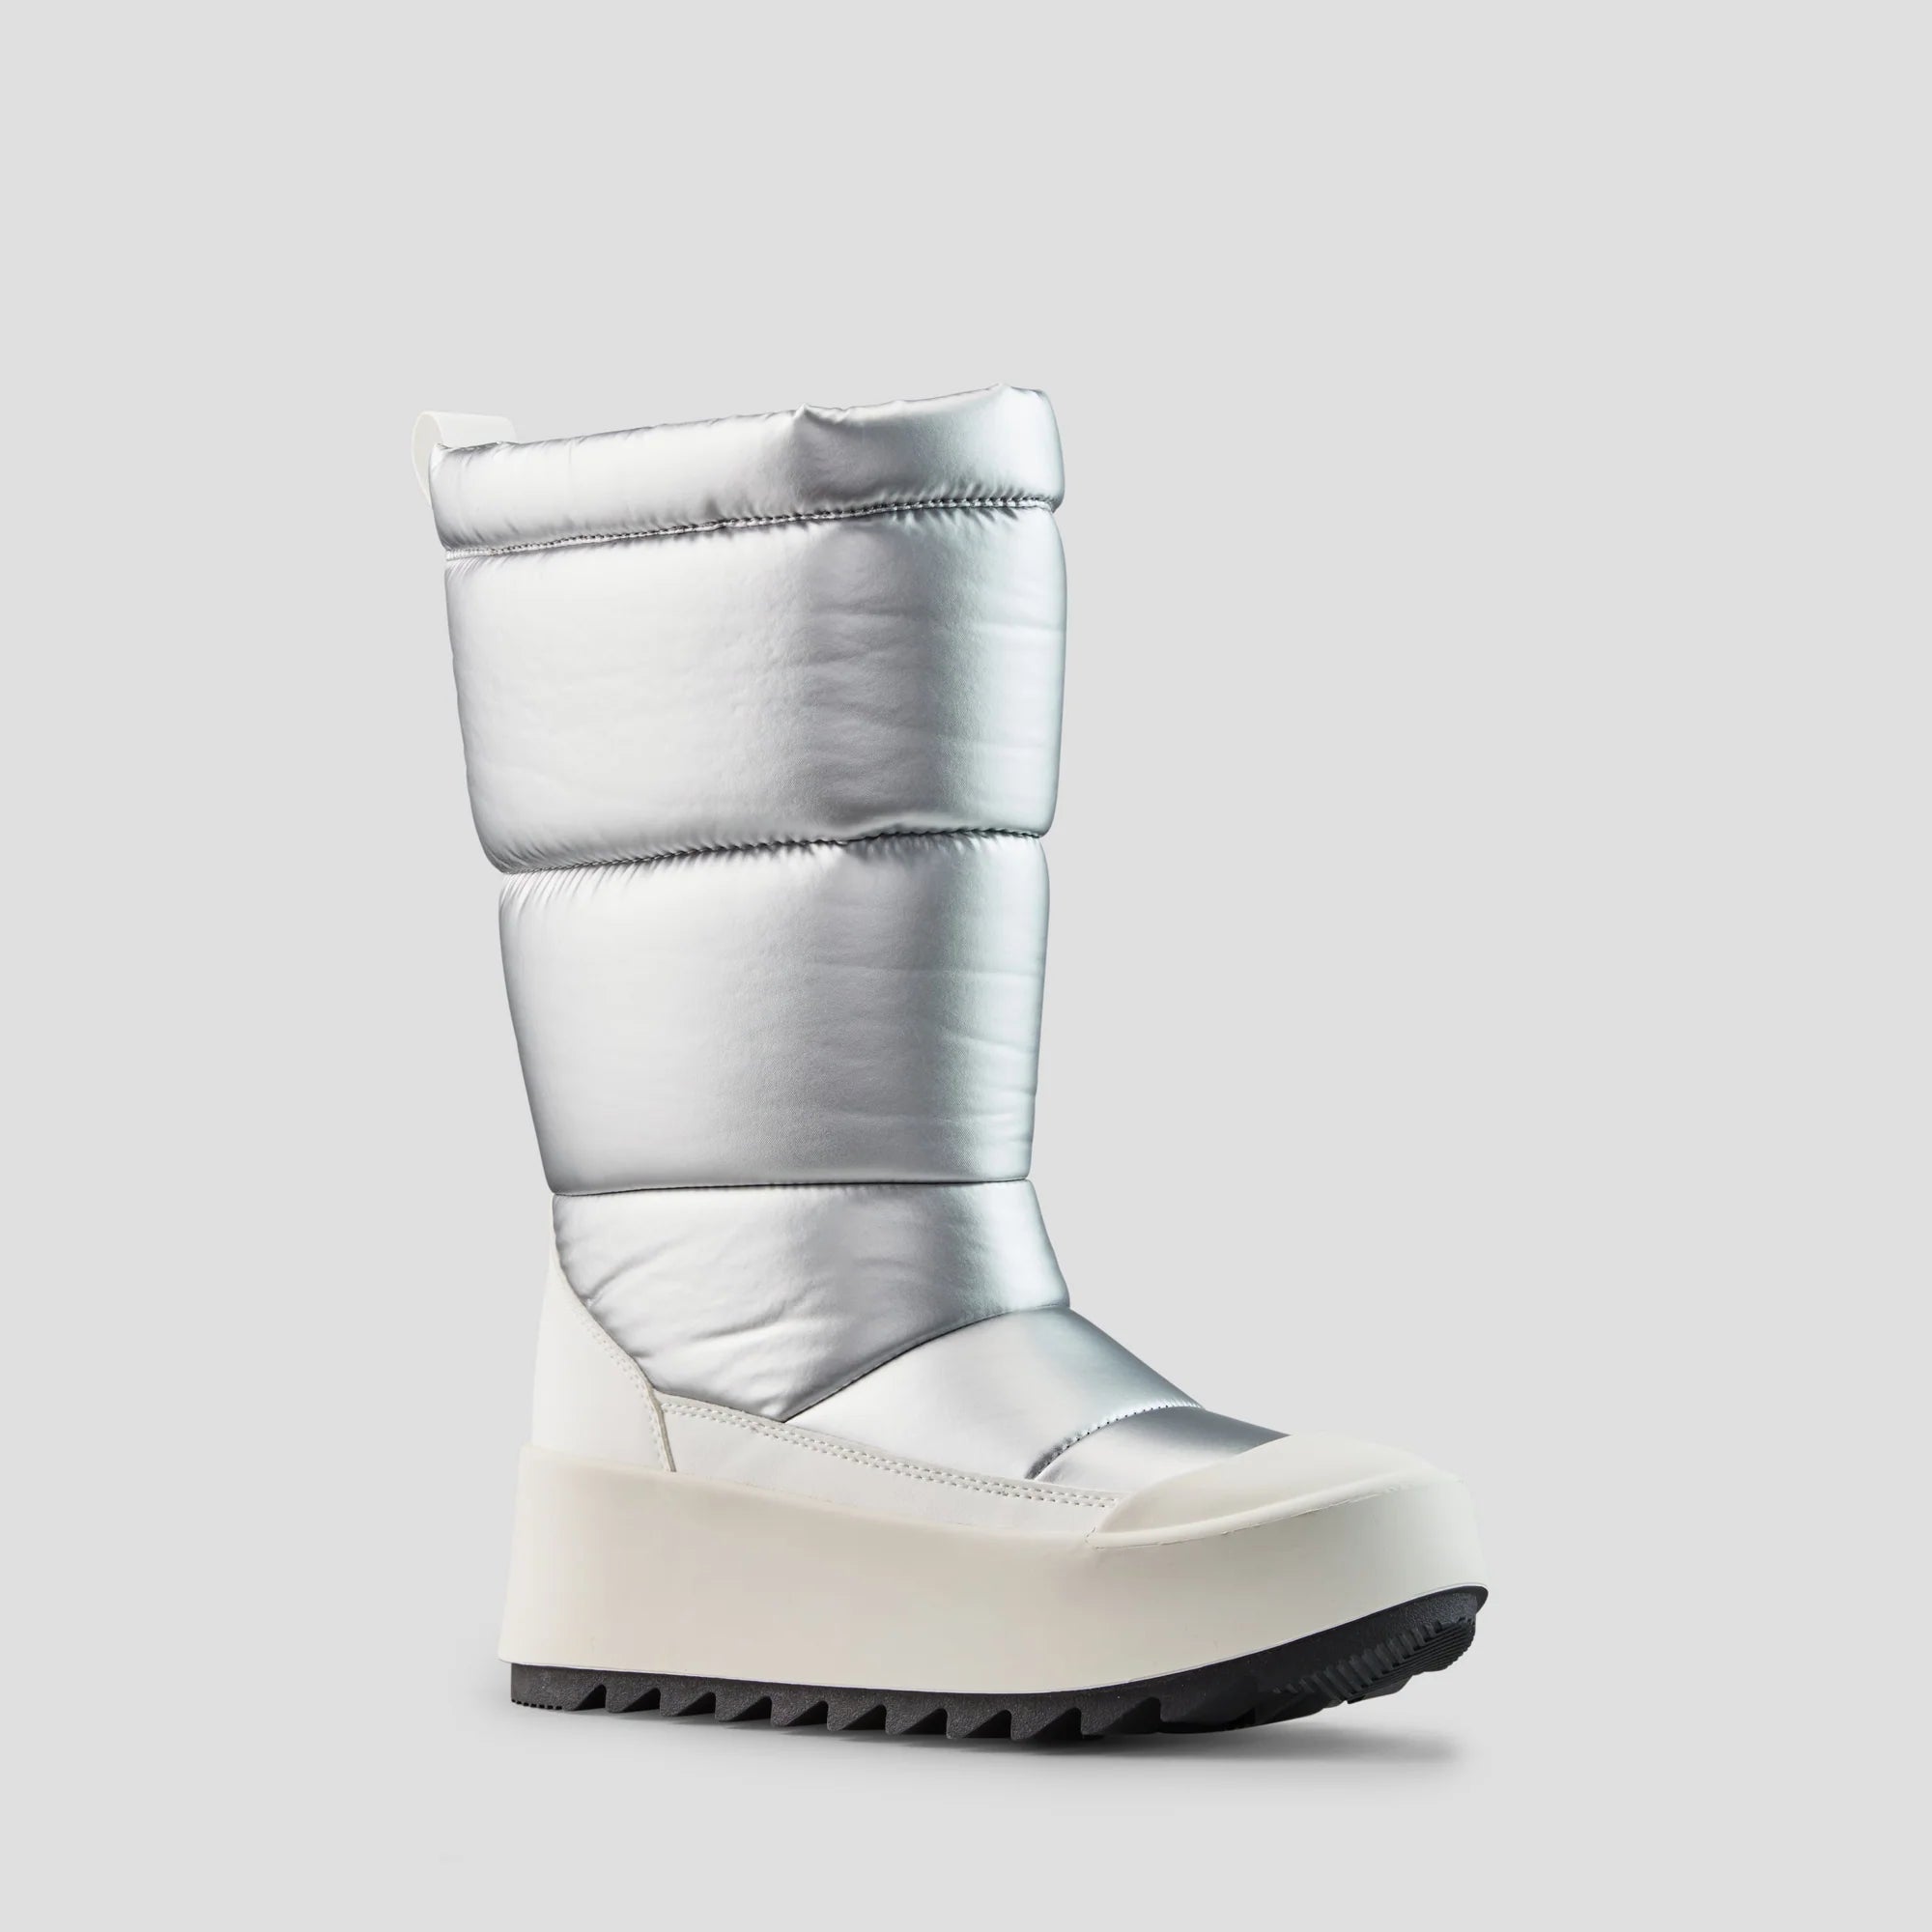 COUGAR SHOES MAGNETO - Nylon Waterproof Winter Boot with PrimaLoft® - Boutique Bubbles